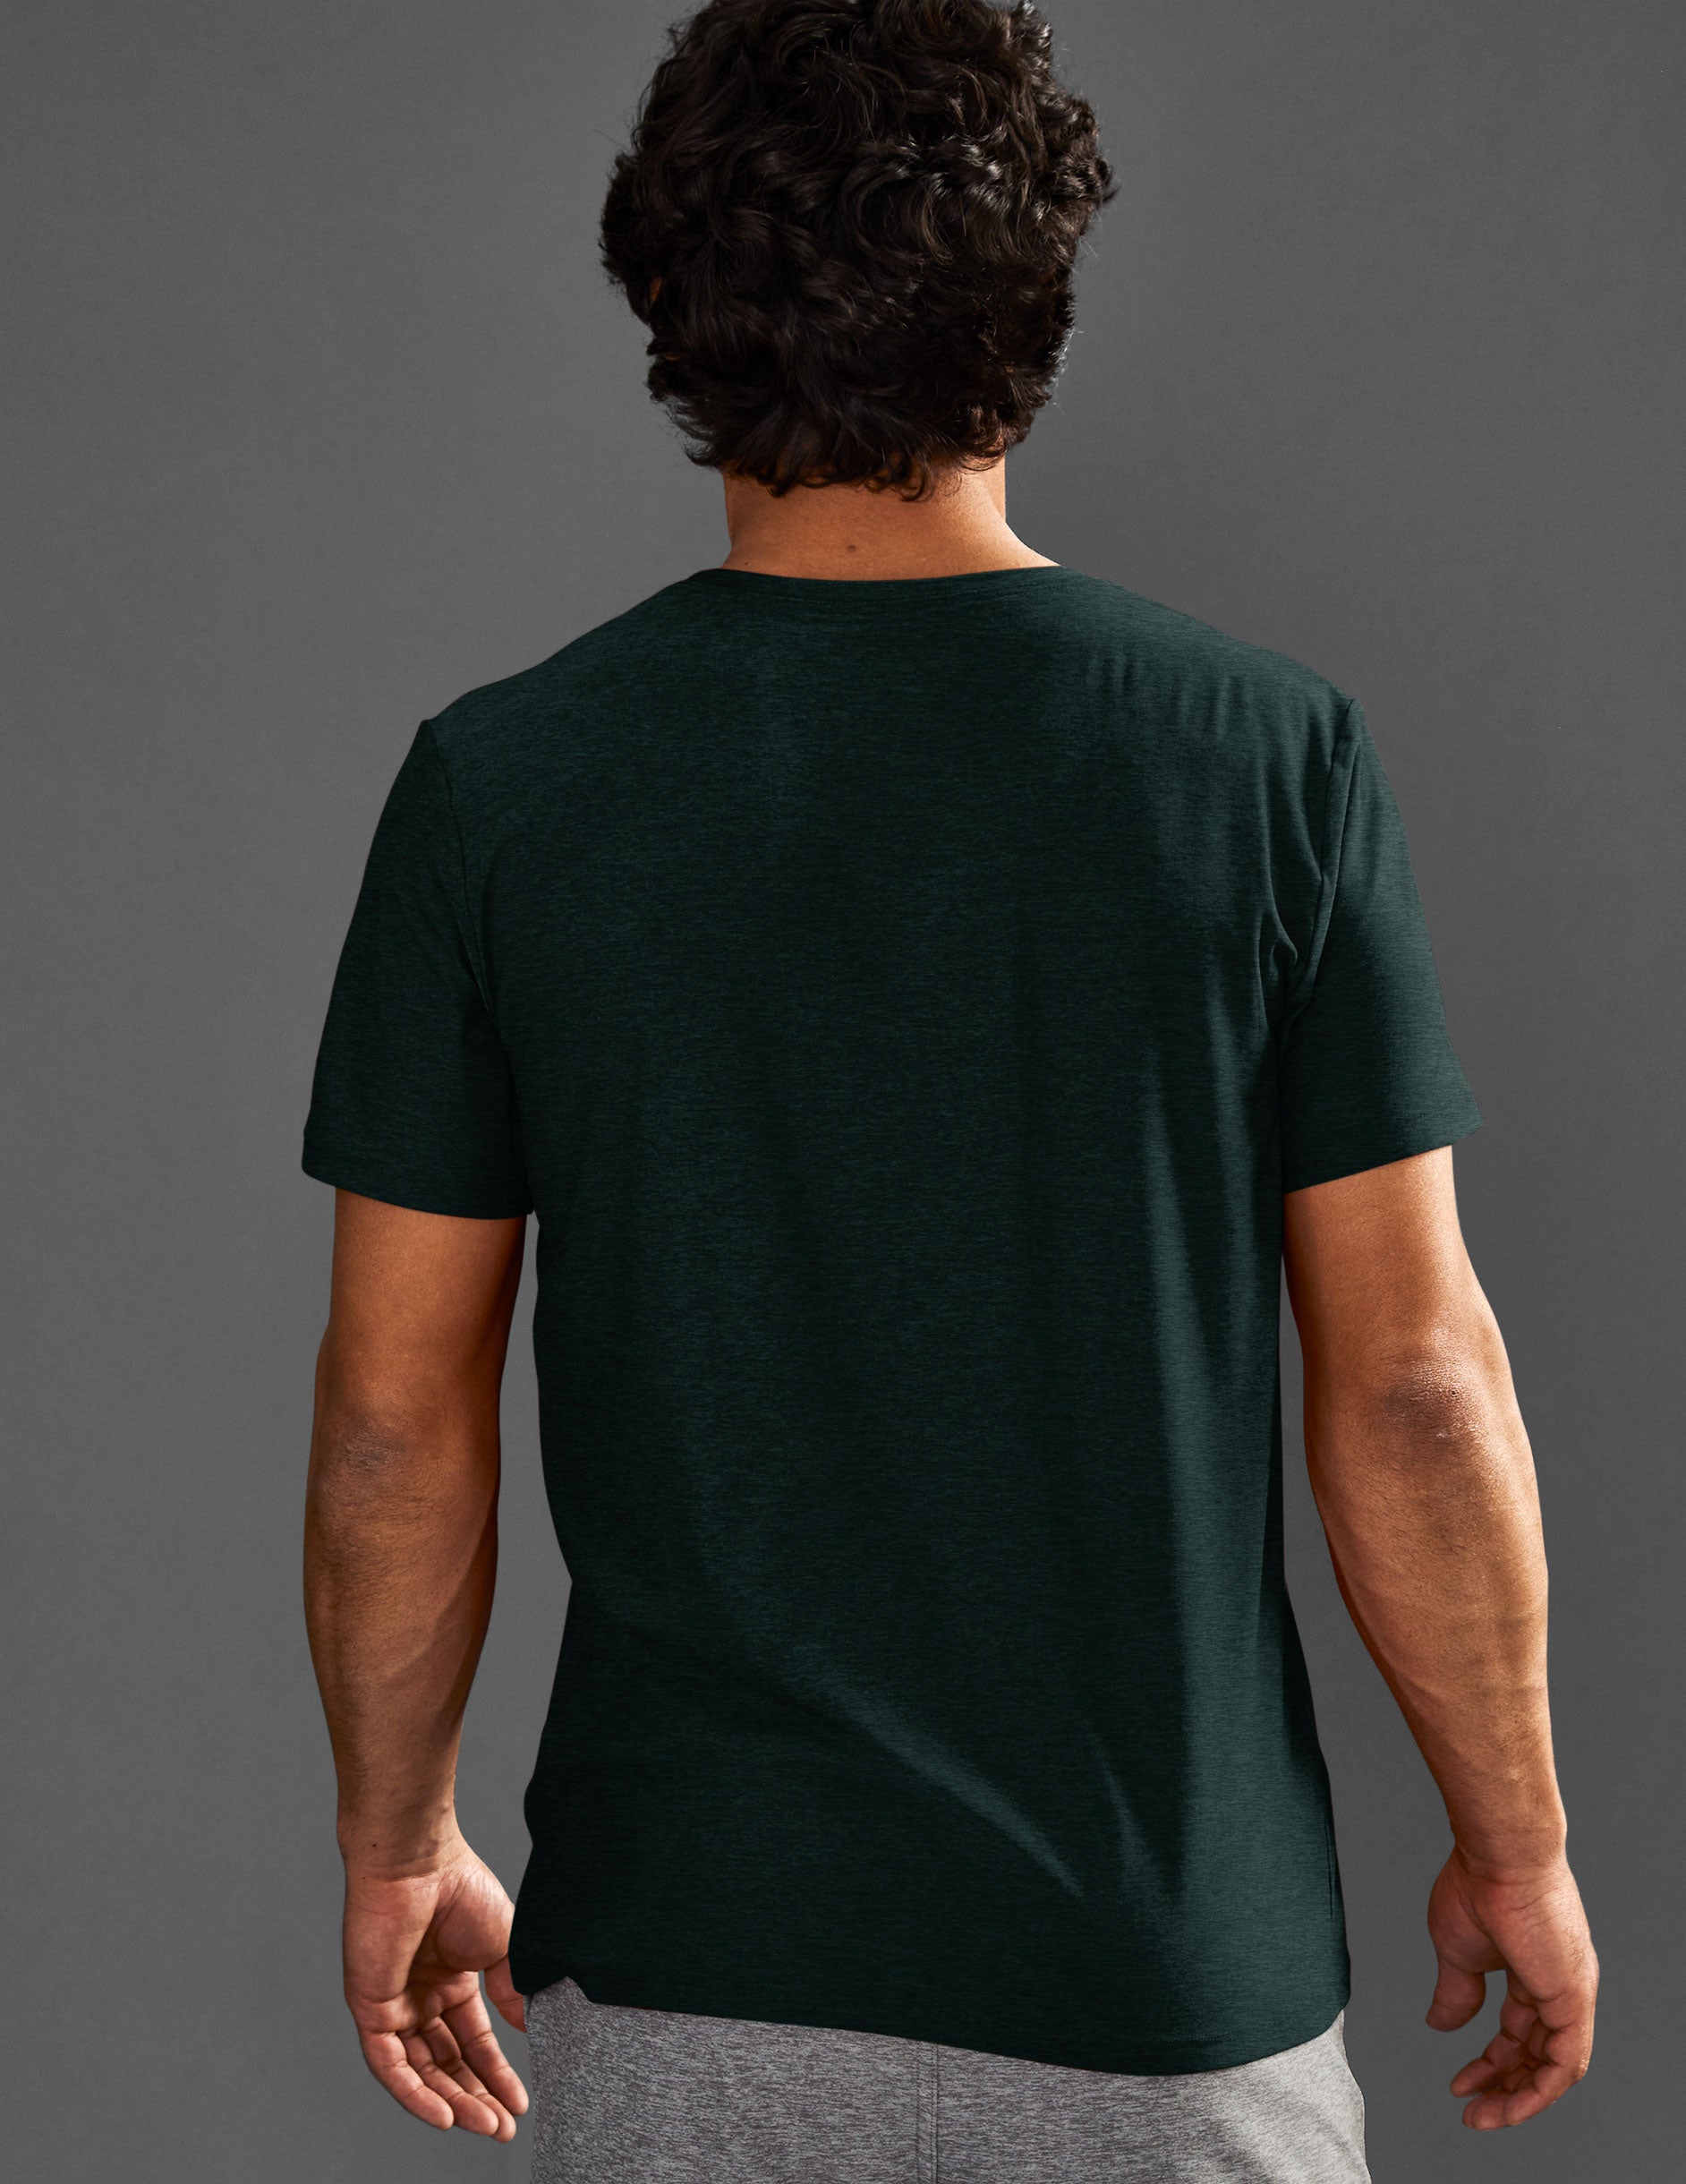 green men's athletic t-shirt. 